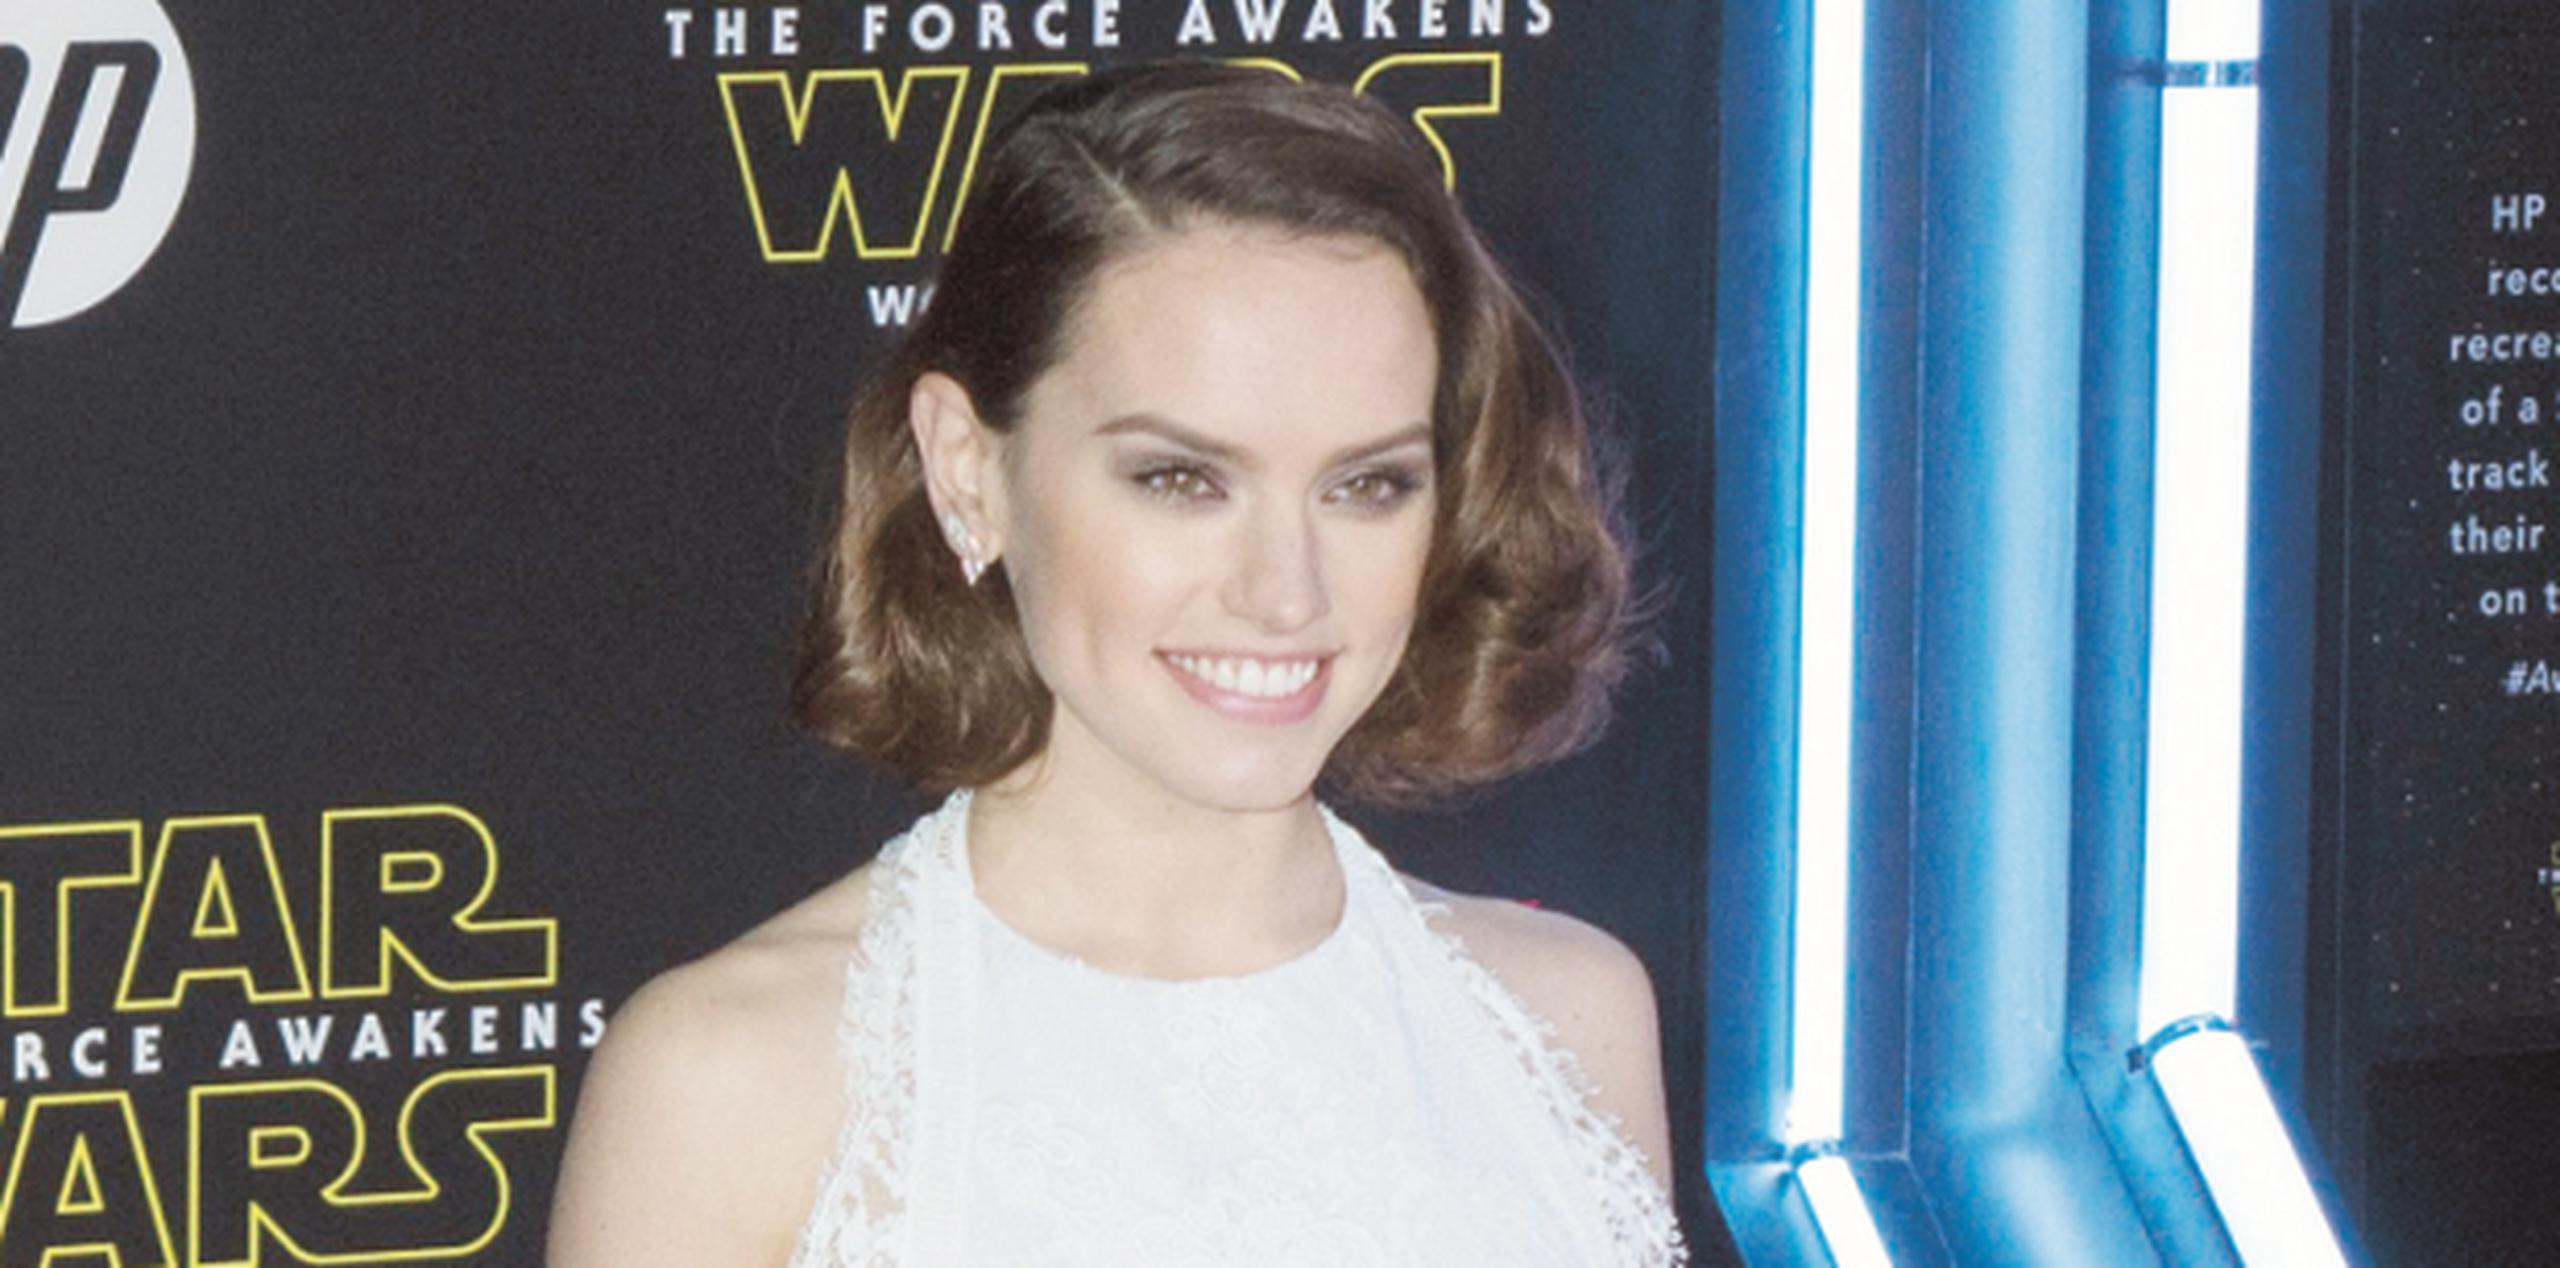 Ridley es la protagonista de "Star Wars: The Force Awakens". (Archivo)